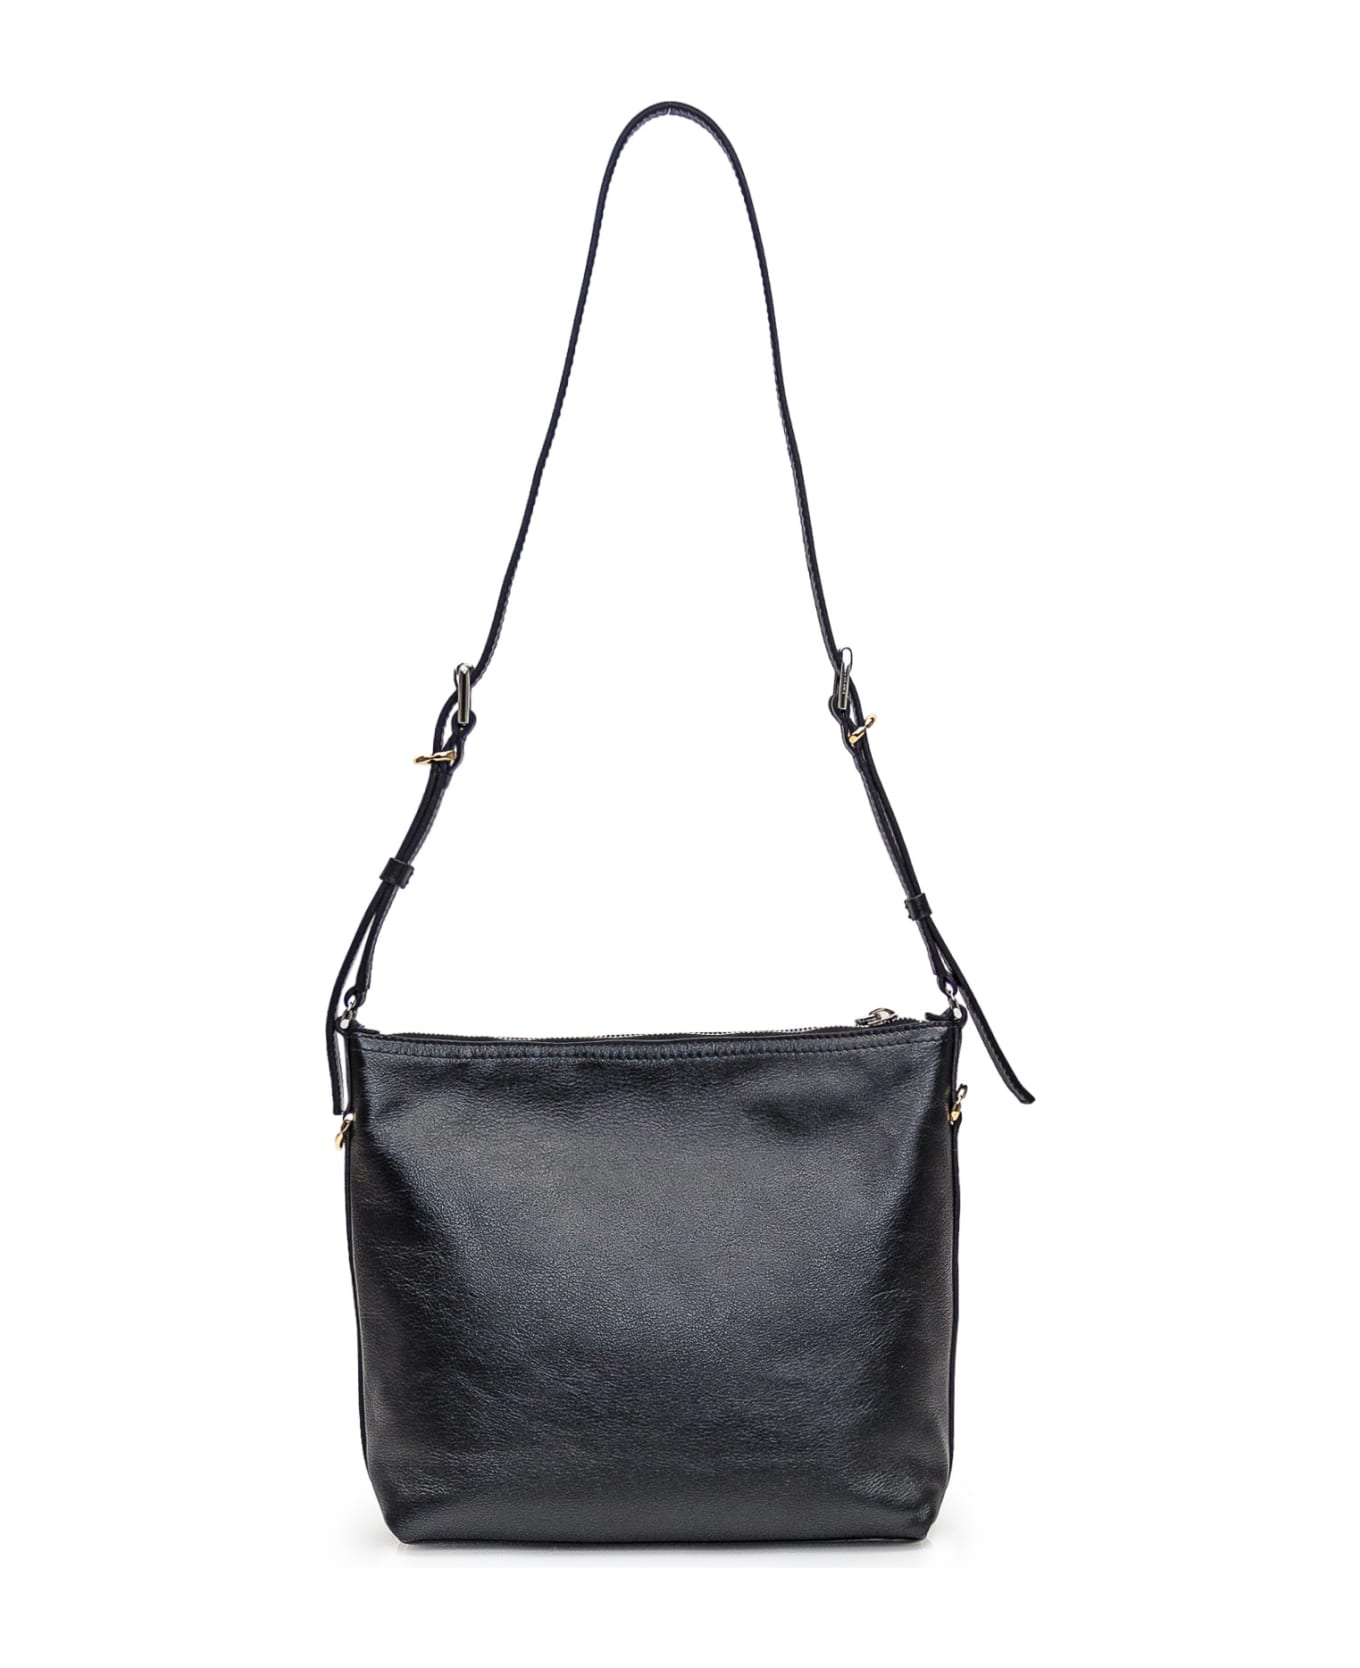 Givenchy Small Voyou Bag - BLACK